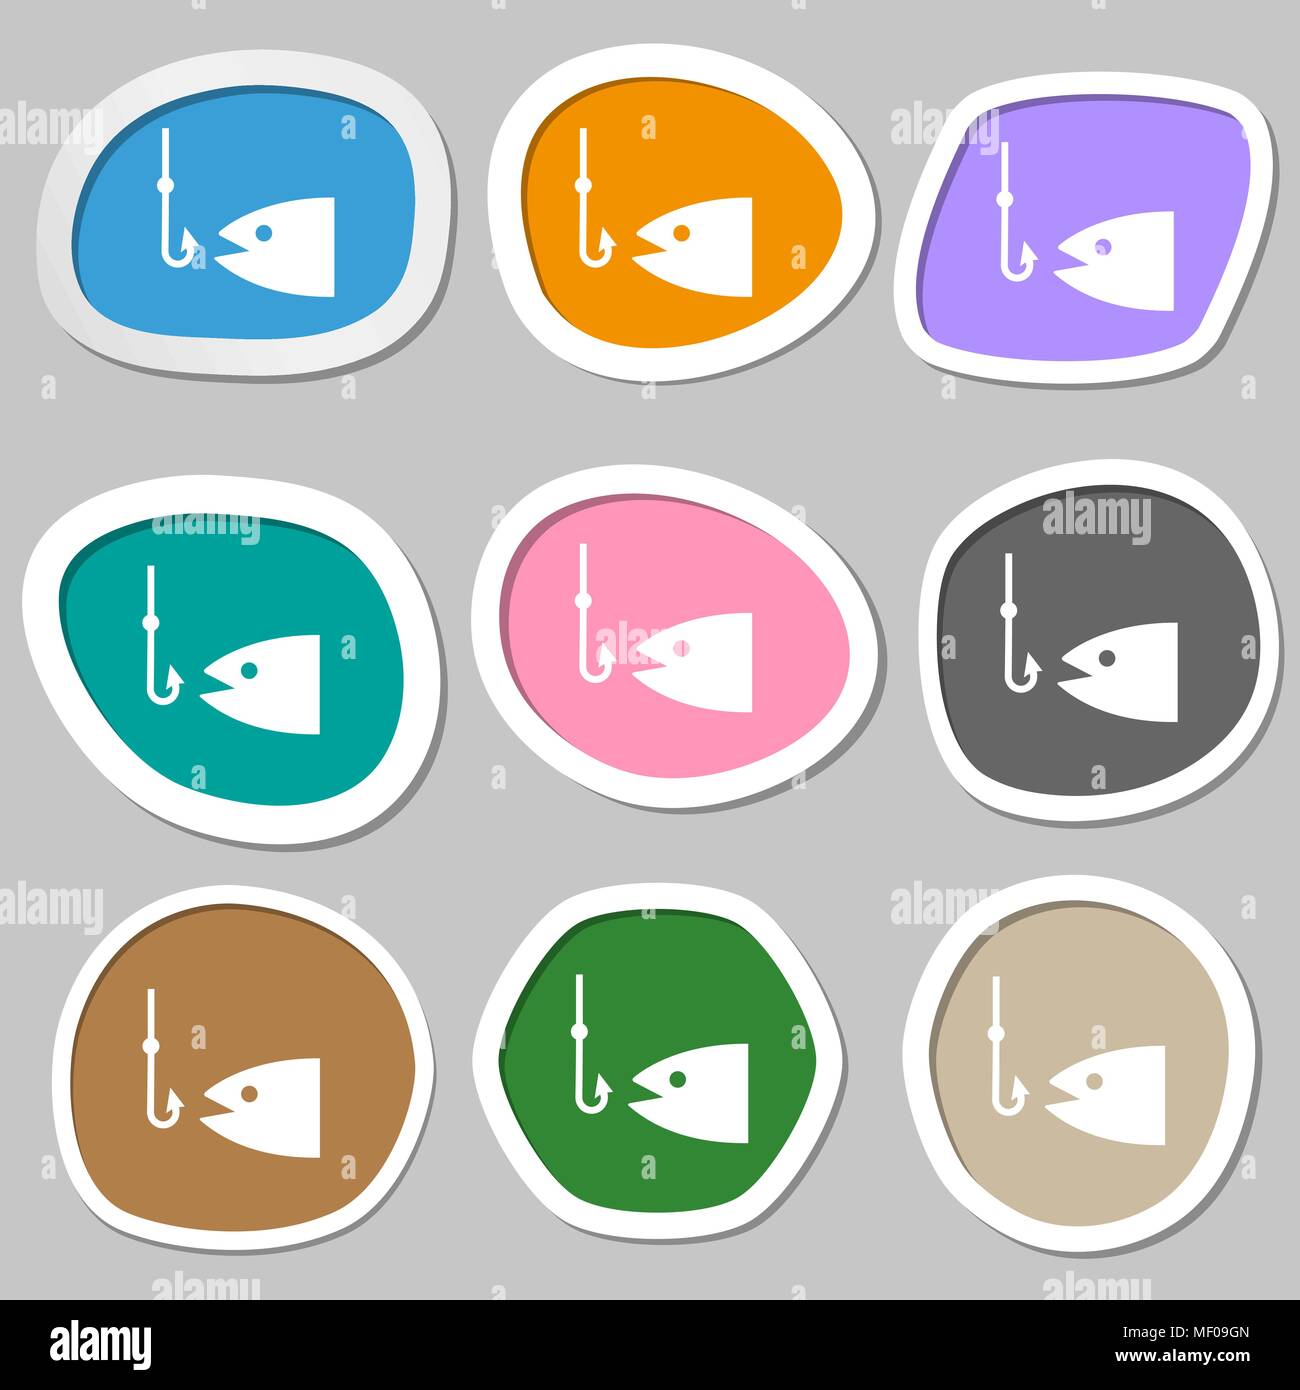 Fishing icon symbols. Multicolored paper stickers. Vector illustration Stock Vector